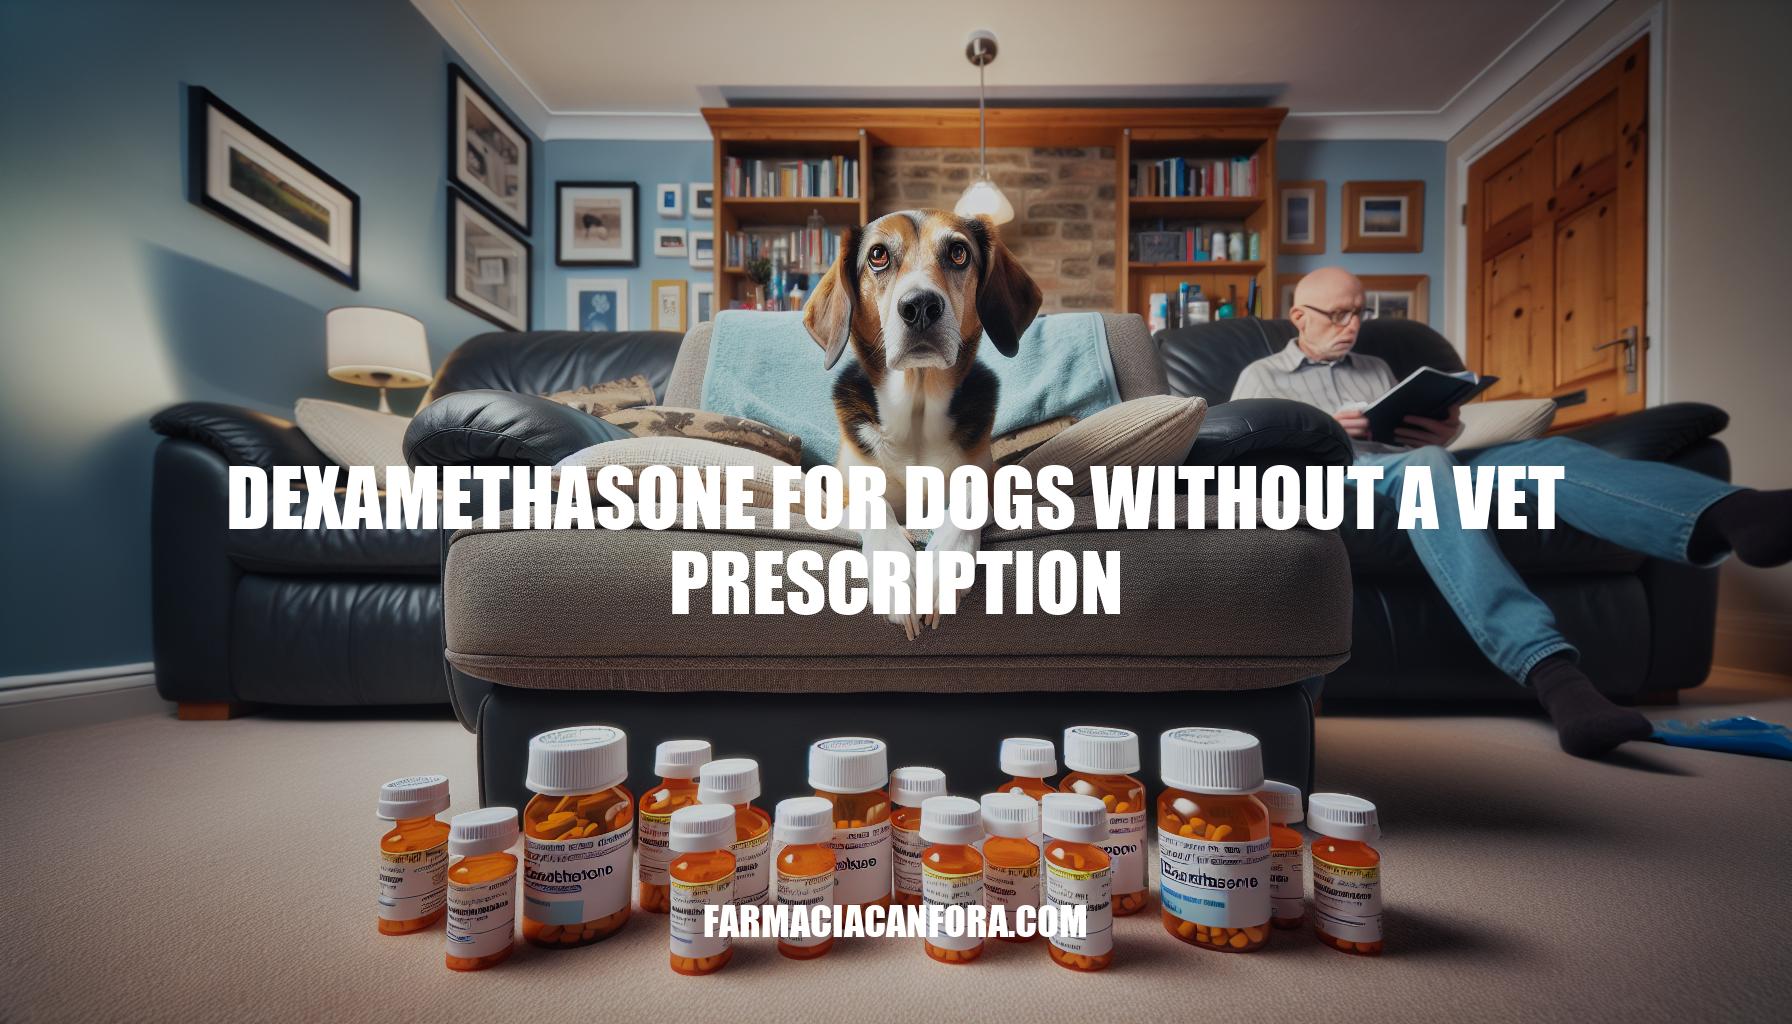 Dexamethasone for Dogs Without a Vet Prescription: Risks and Alternatives